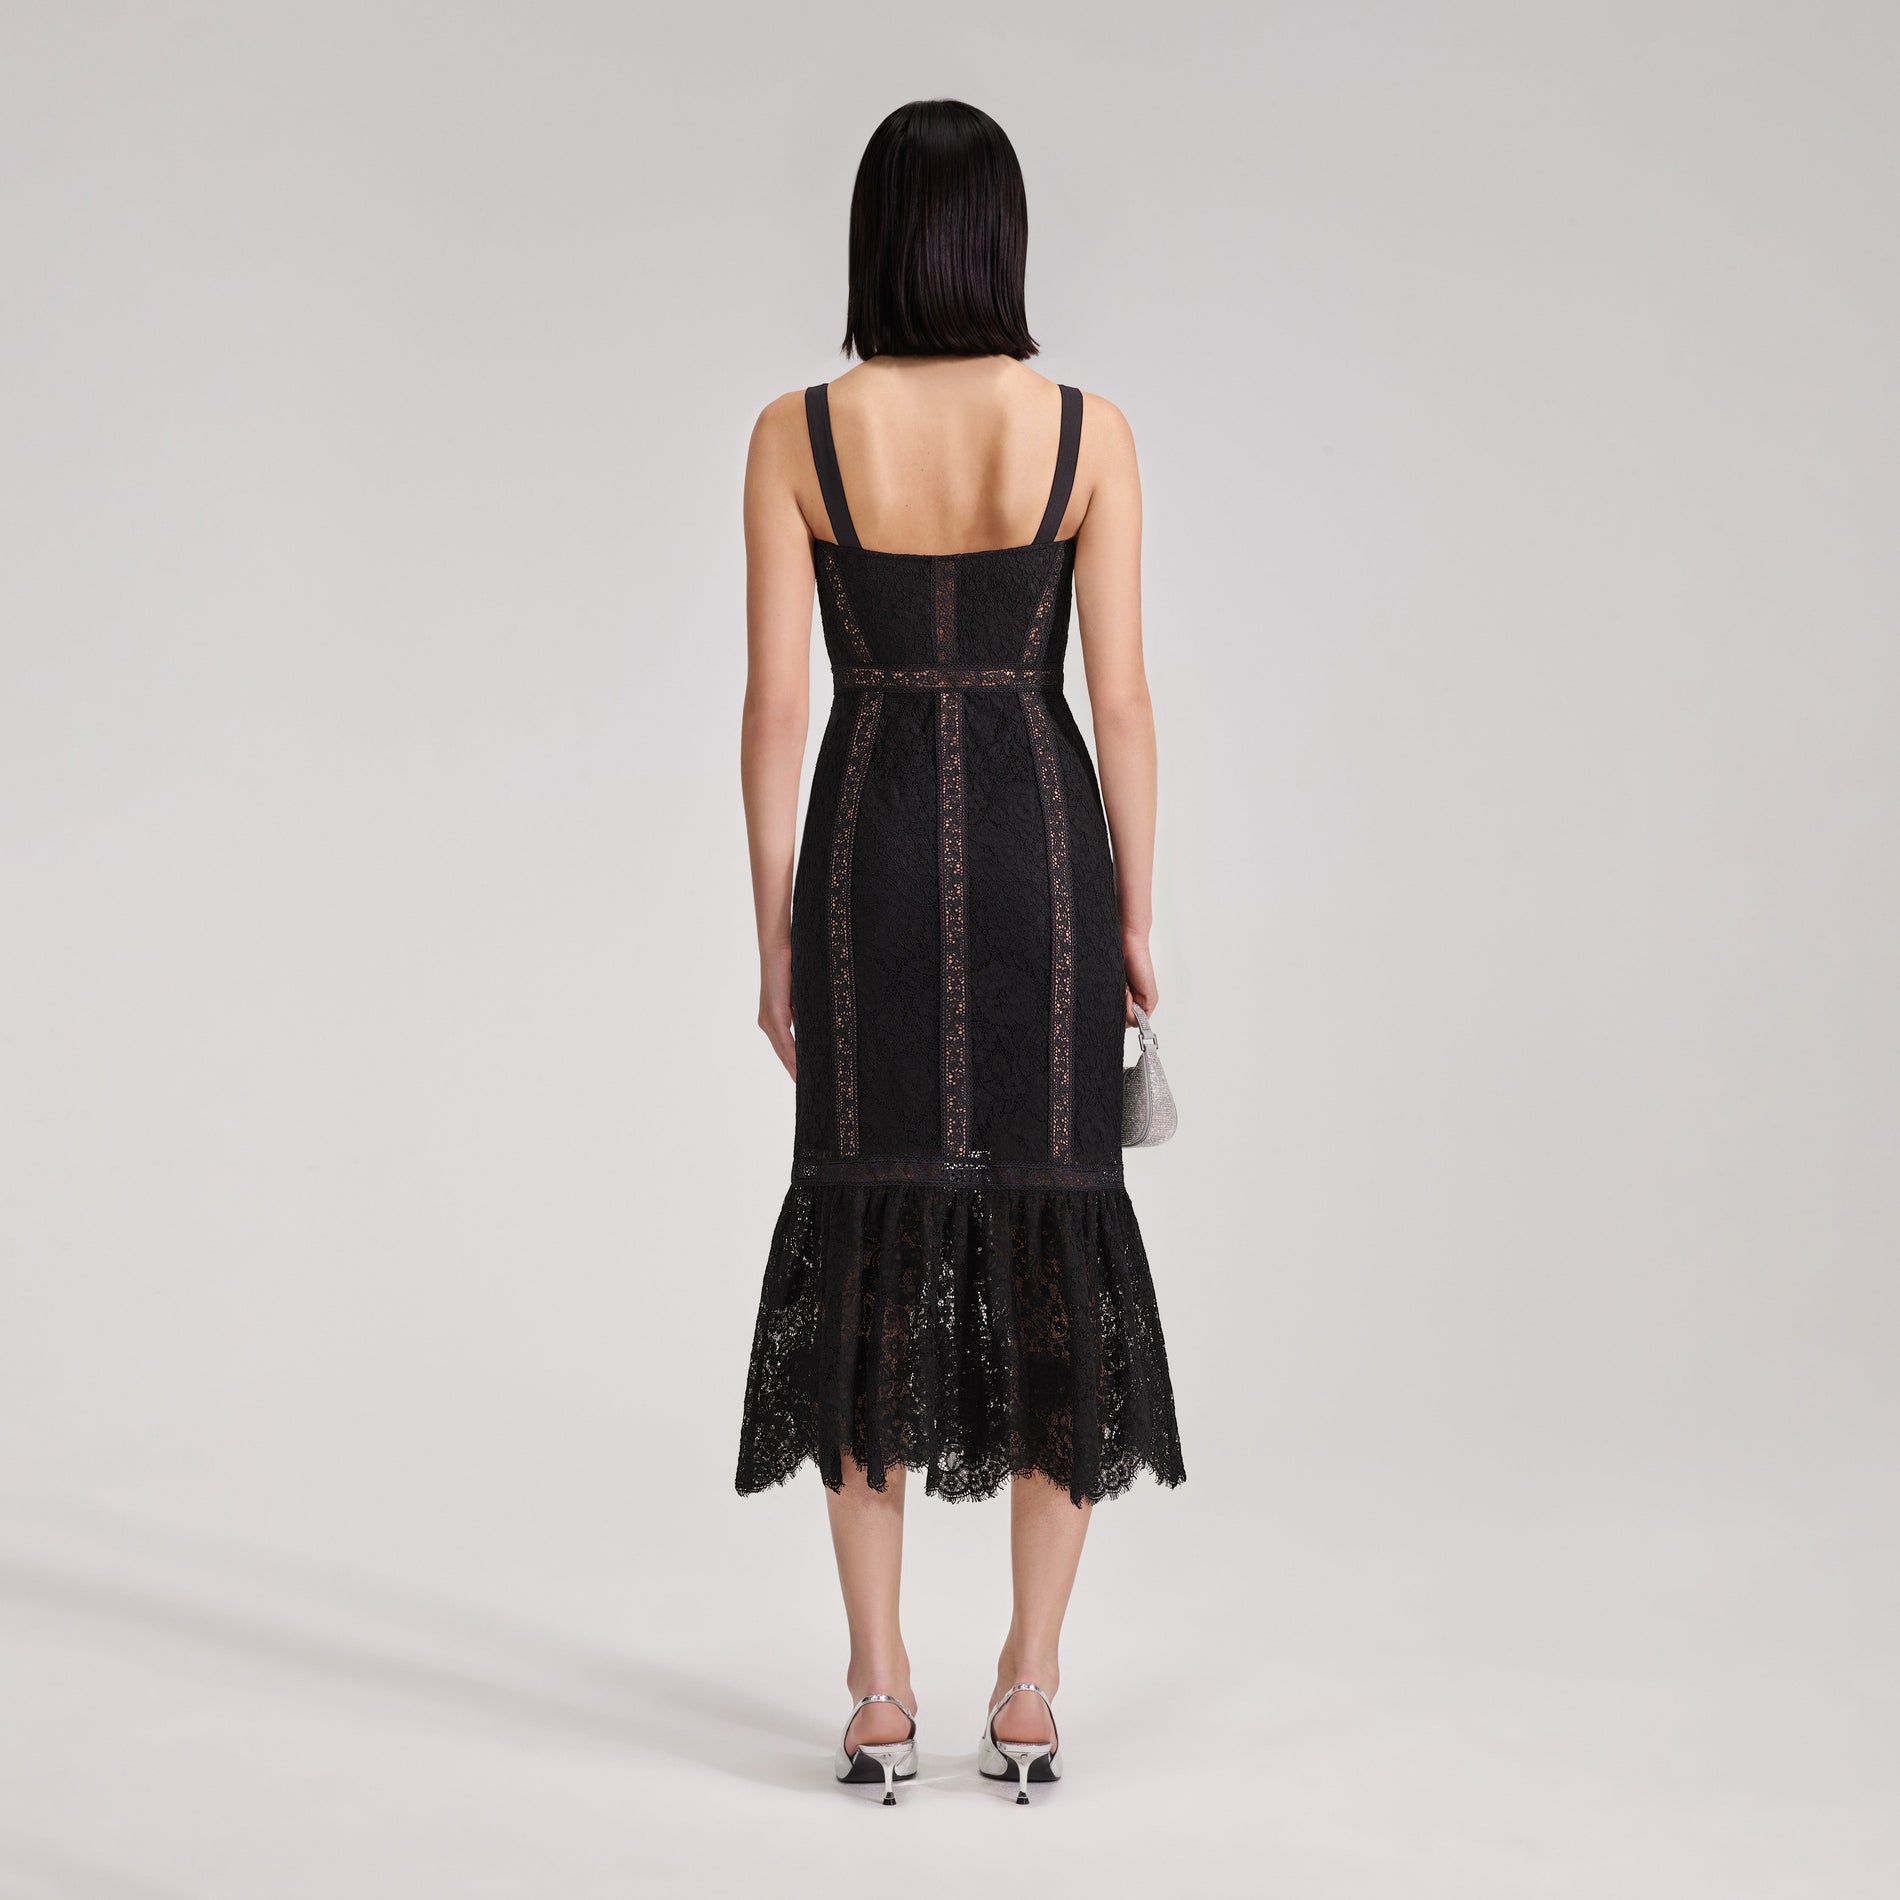 A woman wearing the Black Cord Lace Insert Midi Dress